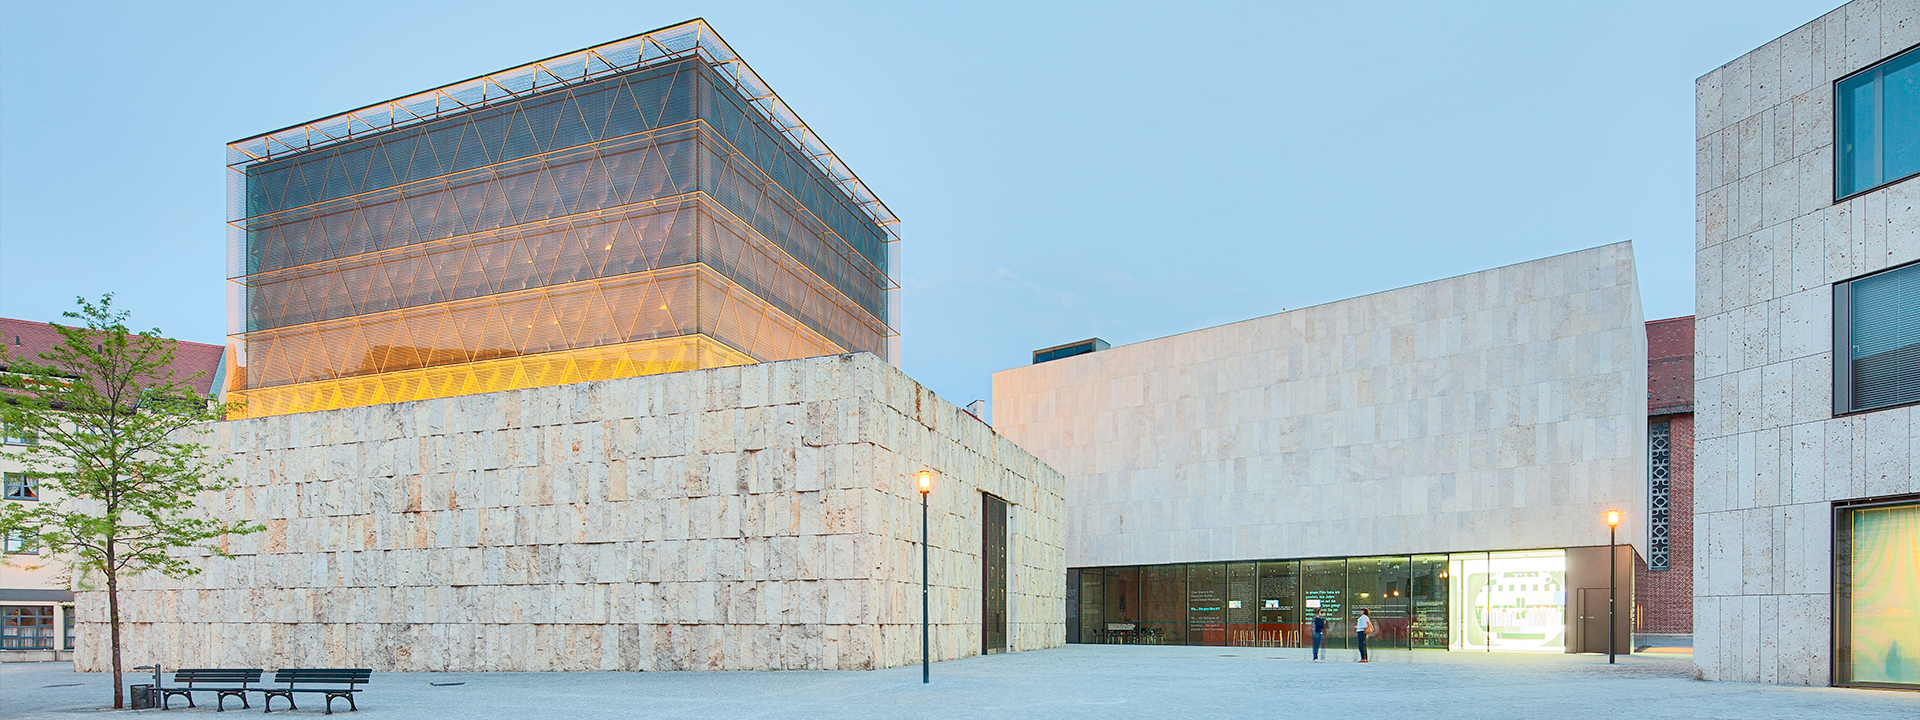 The Jewish Museum – Architecture